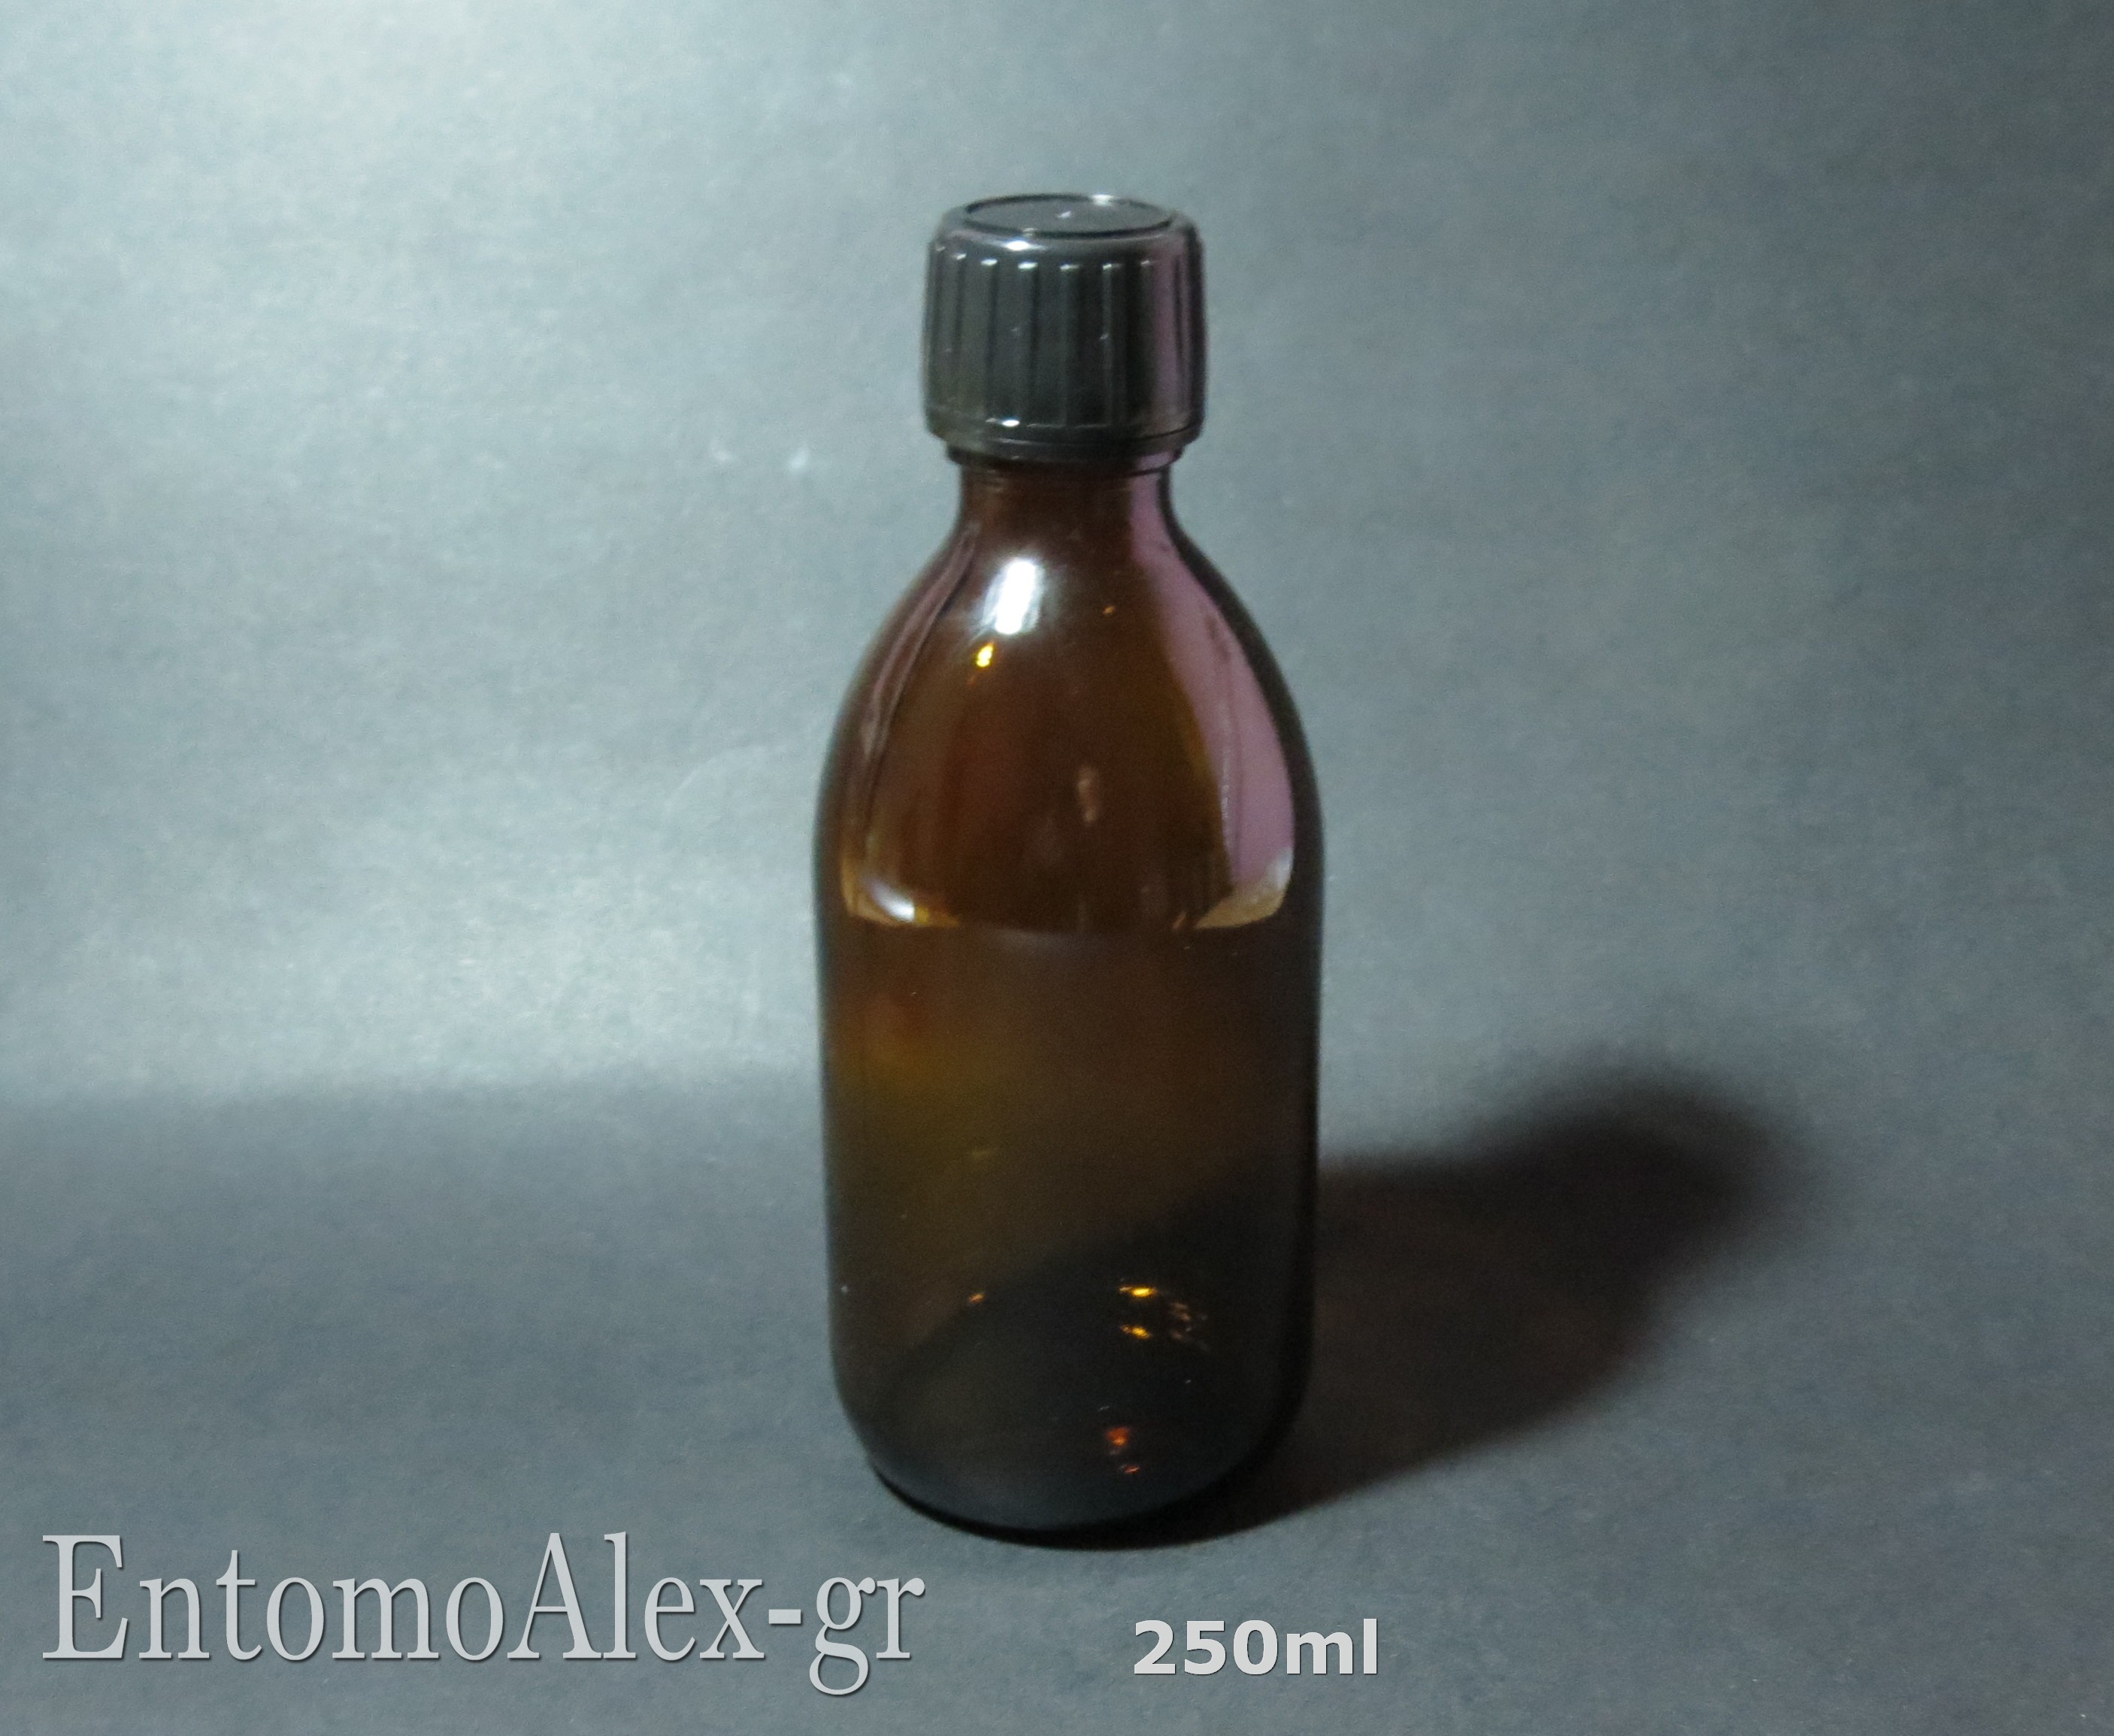 bottiglie flaconi vetro ambra 250ml - EntomoAlex-gr